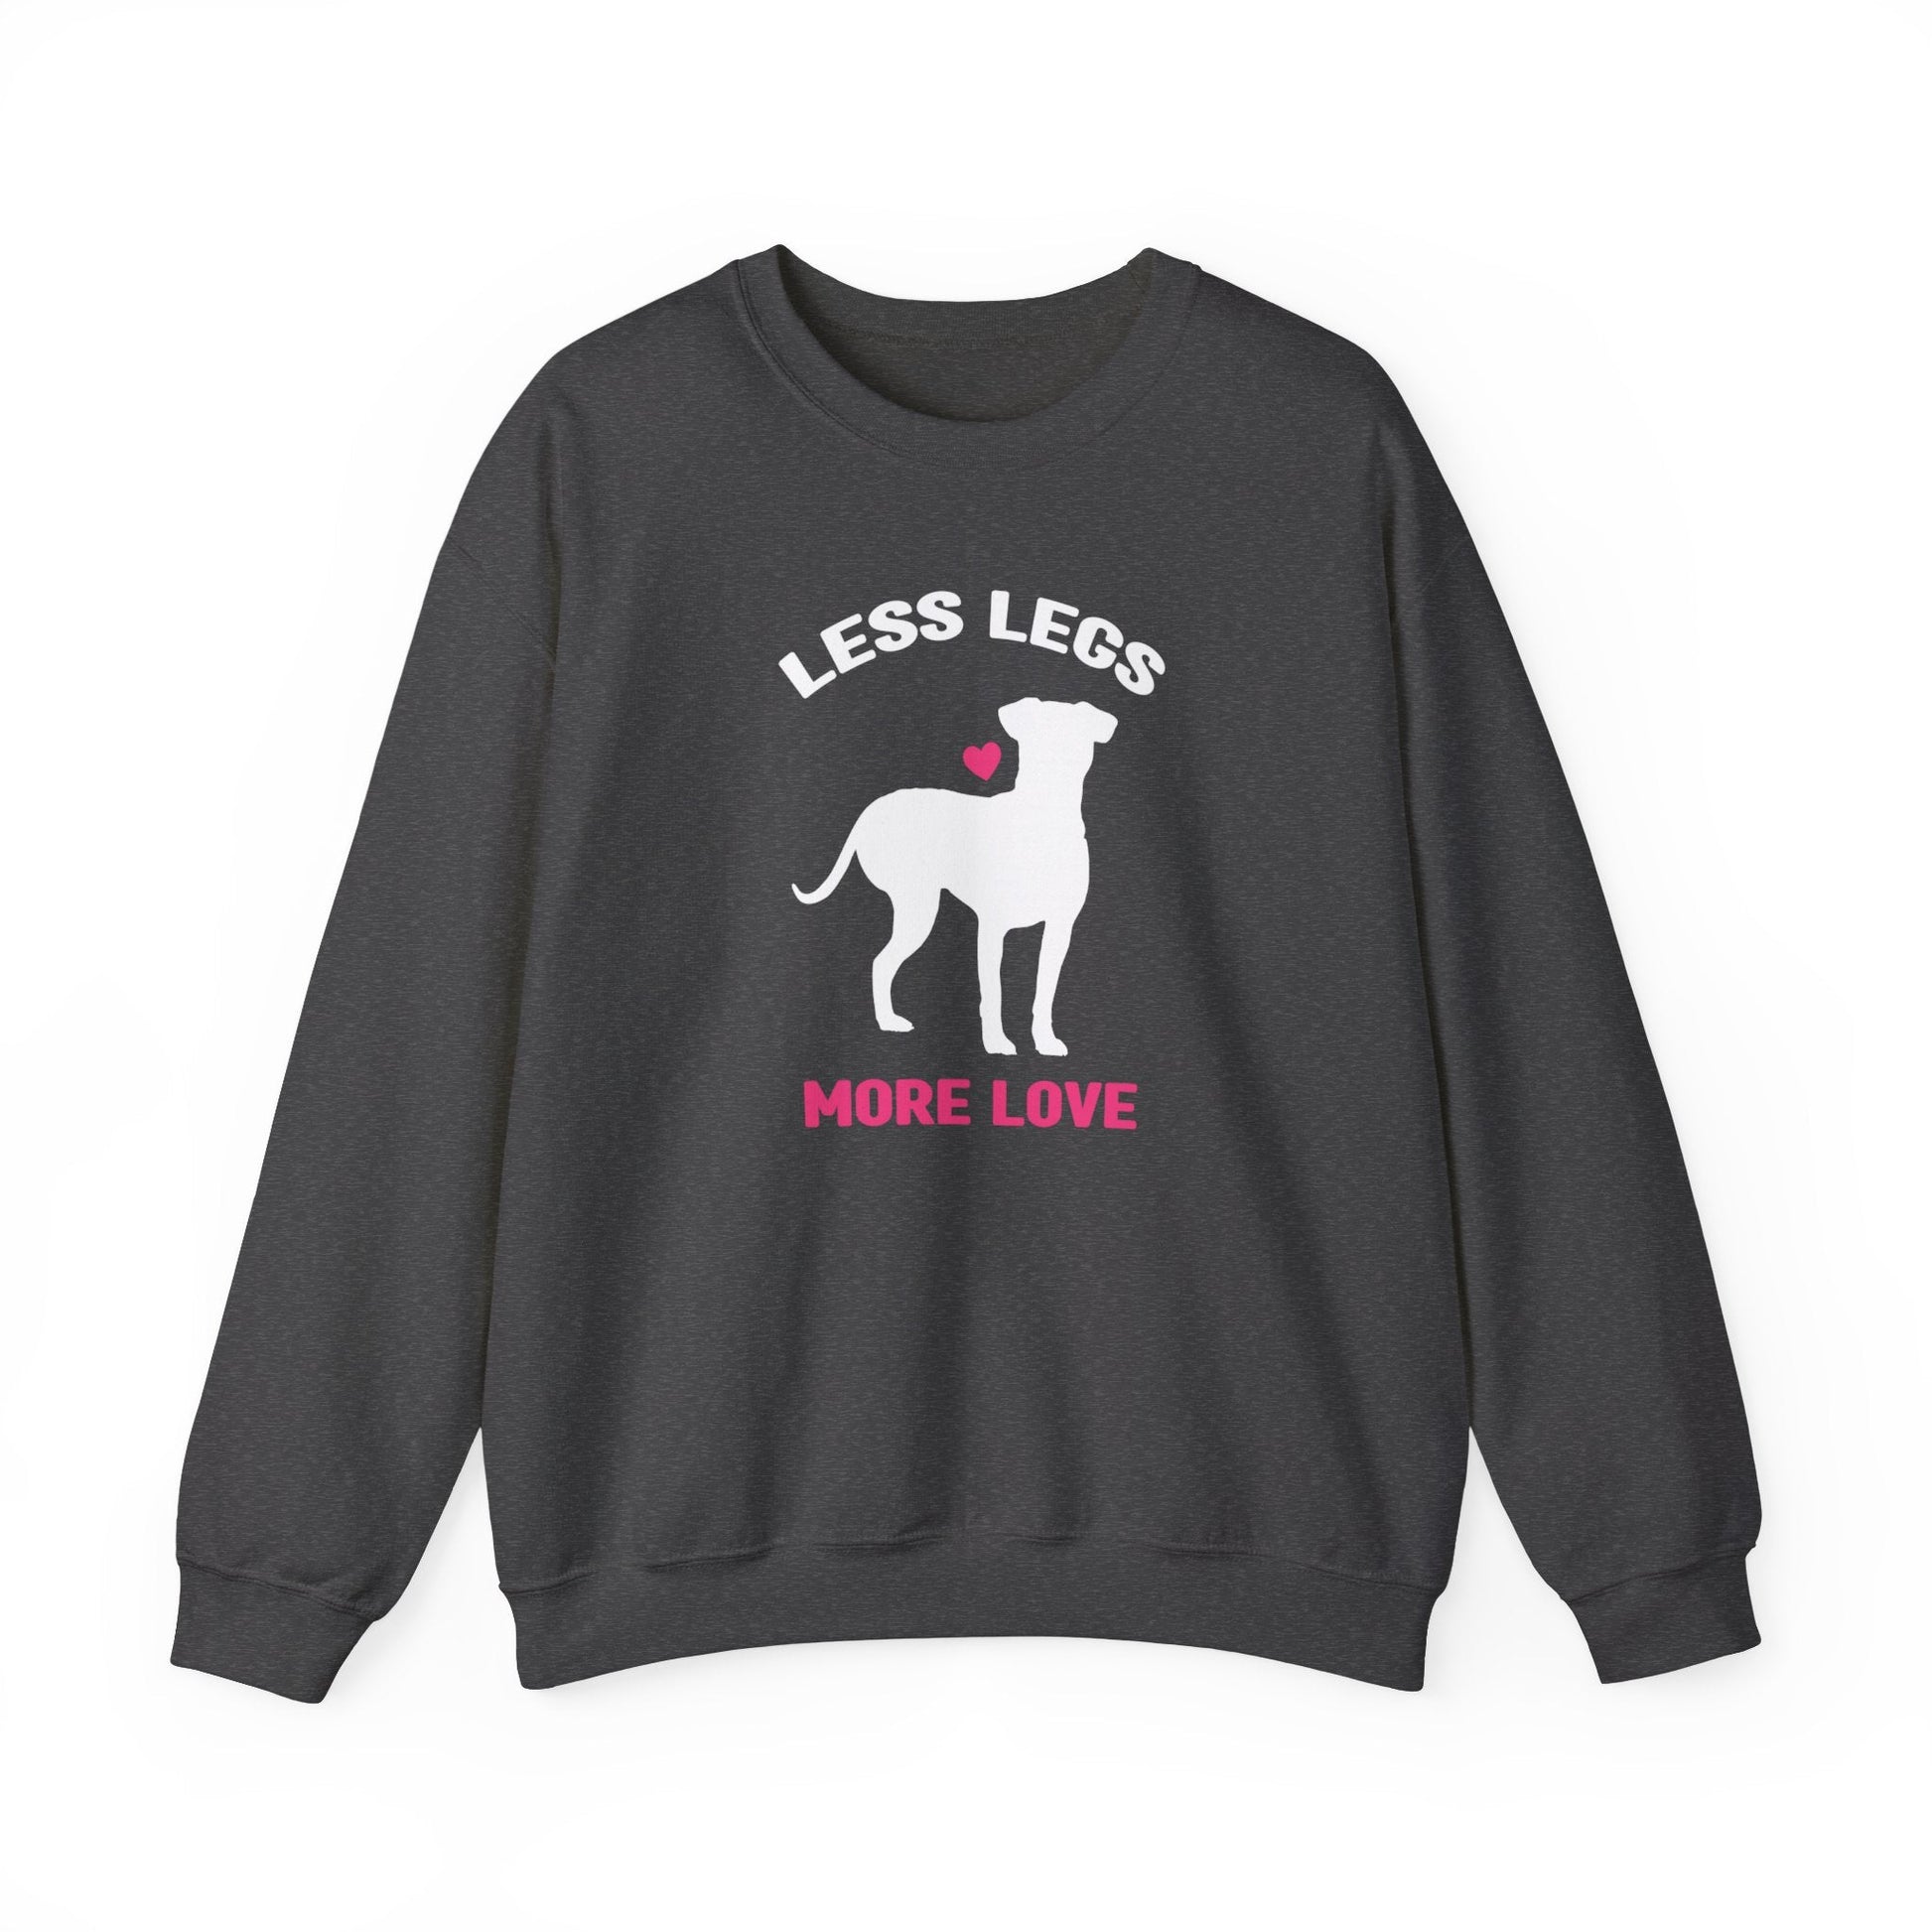 Less Legs, More Love | Crewneck Sweatshirt - Detezi Designs-67877102767763340978